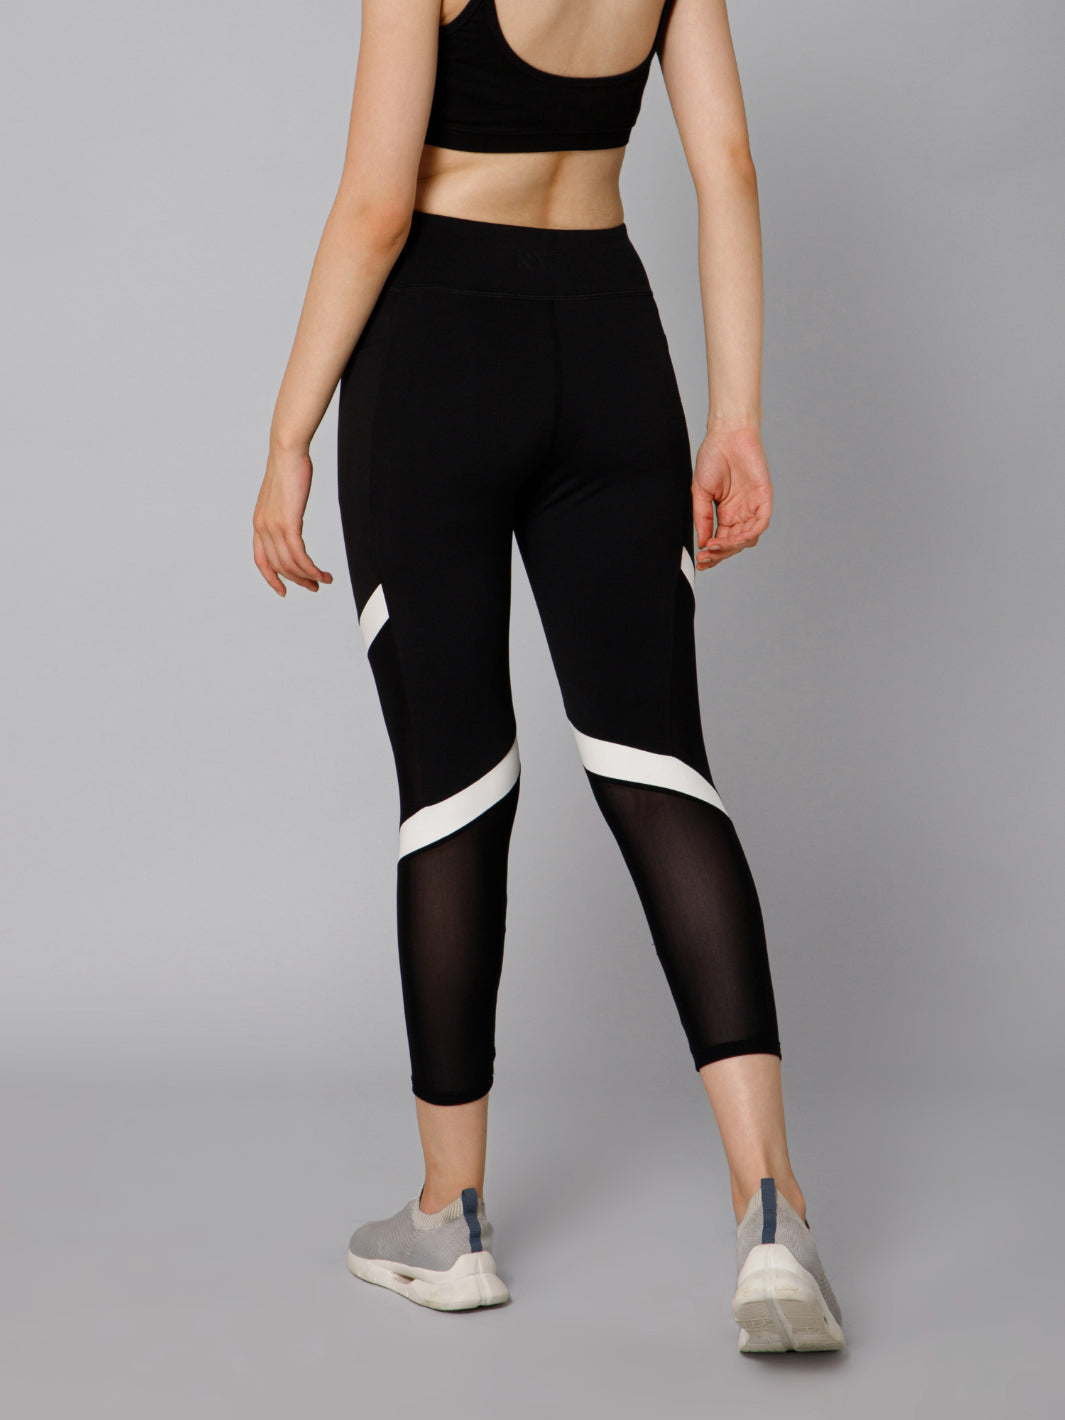 Arya Black Leggings With Back Mesh Panels / Yoga Wear / Yoga